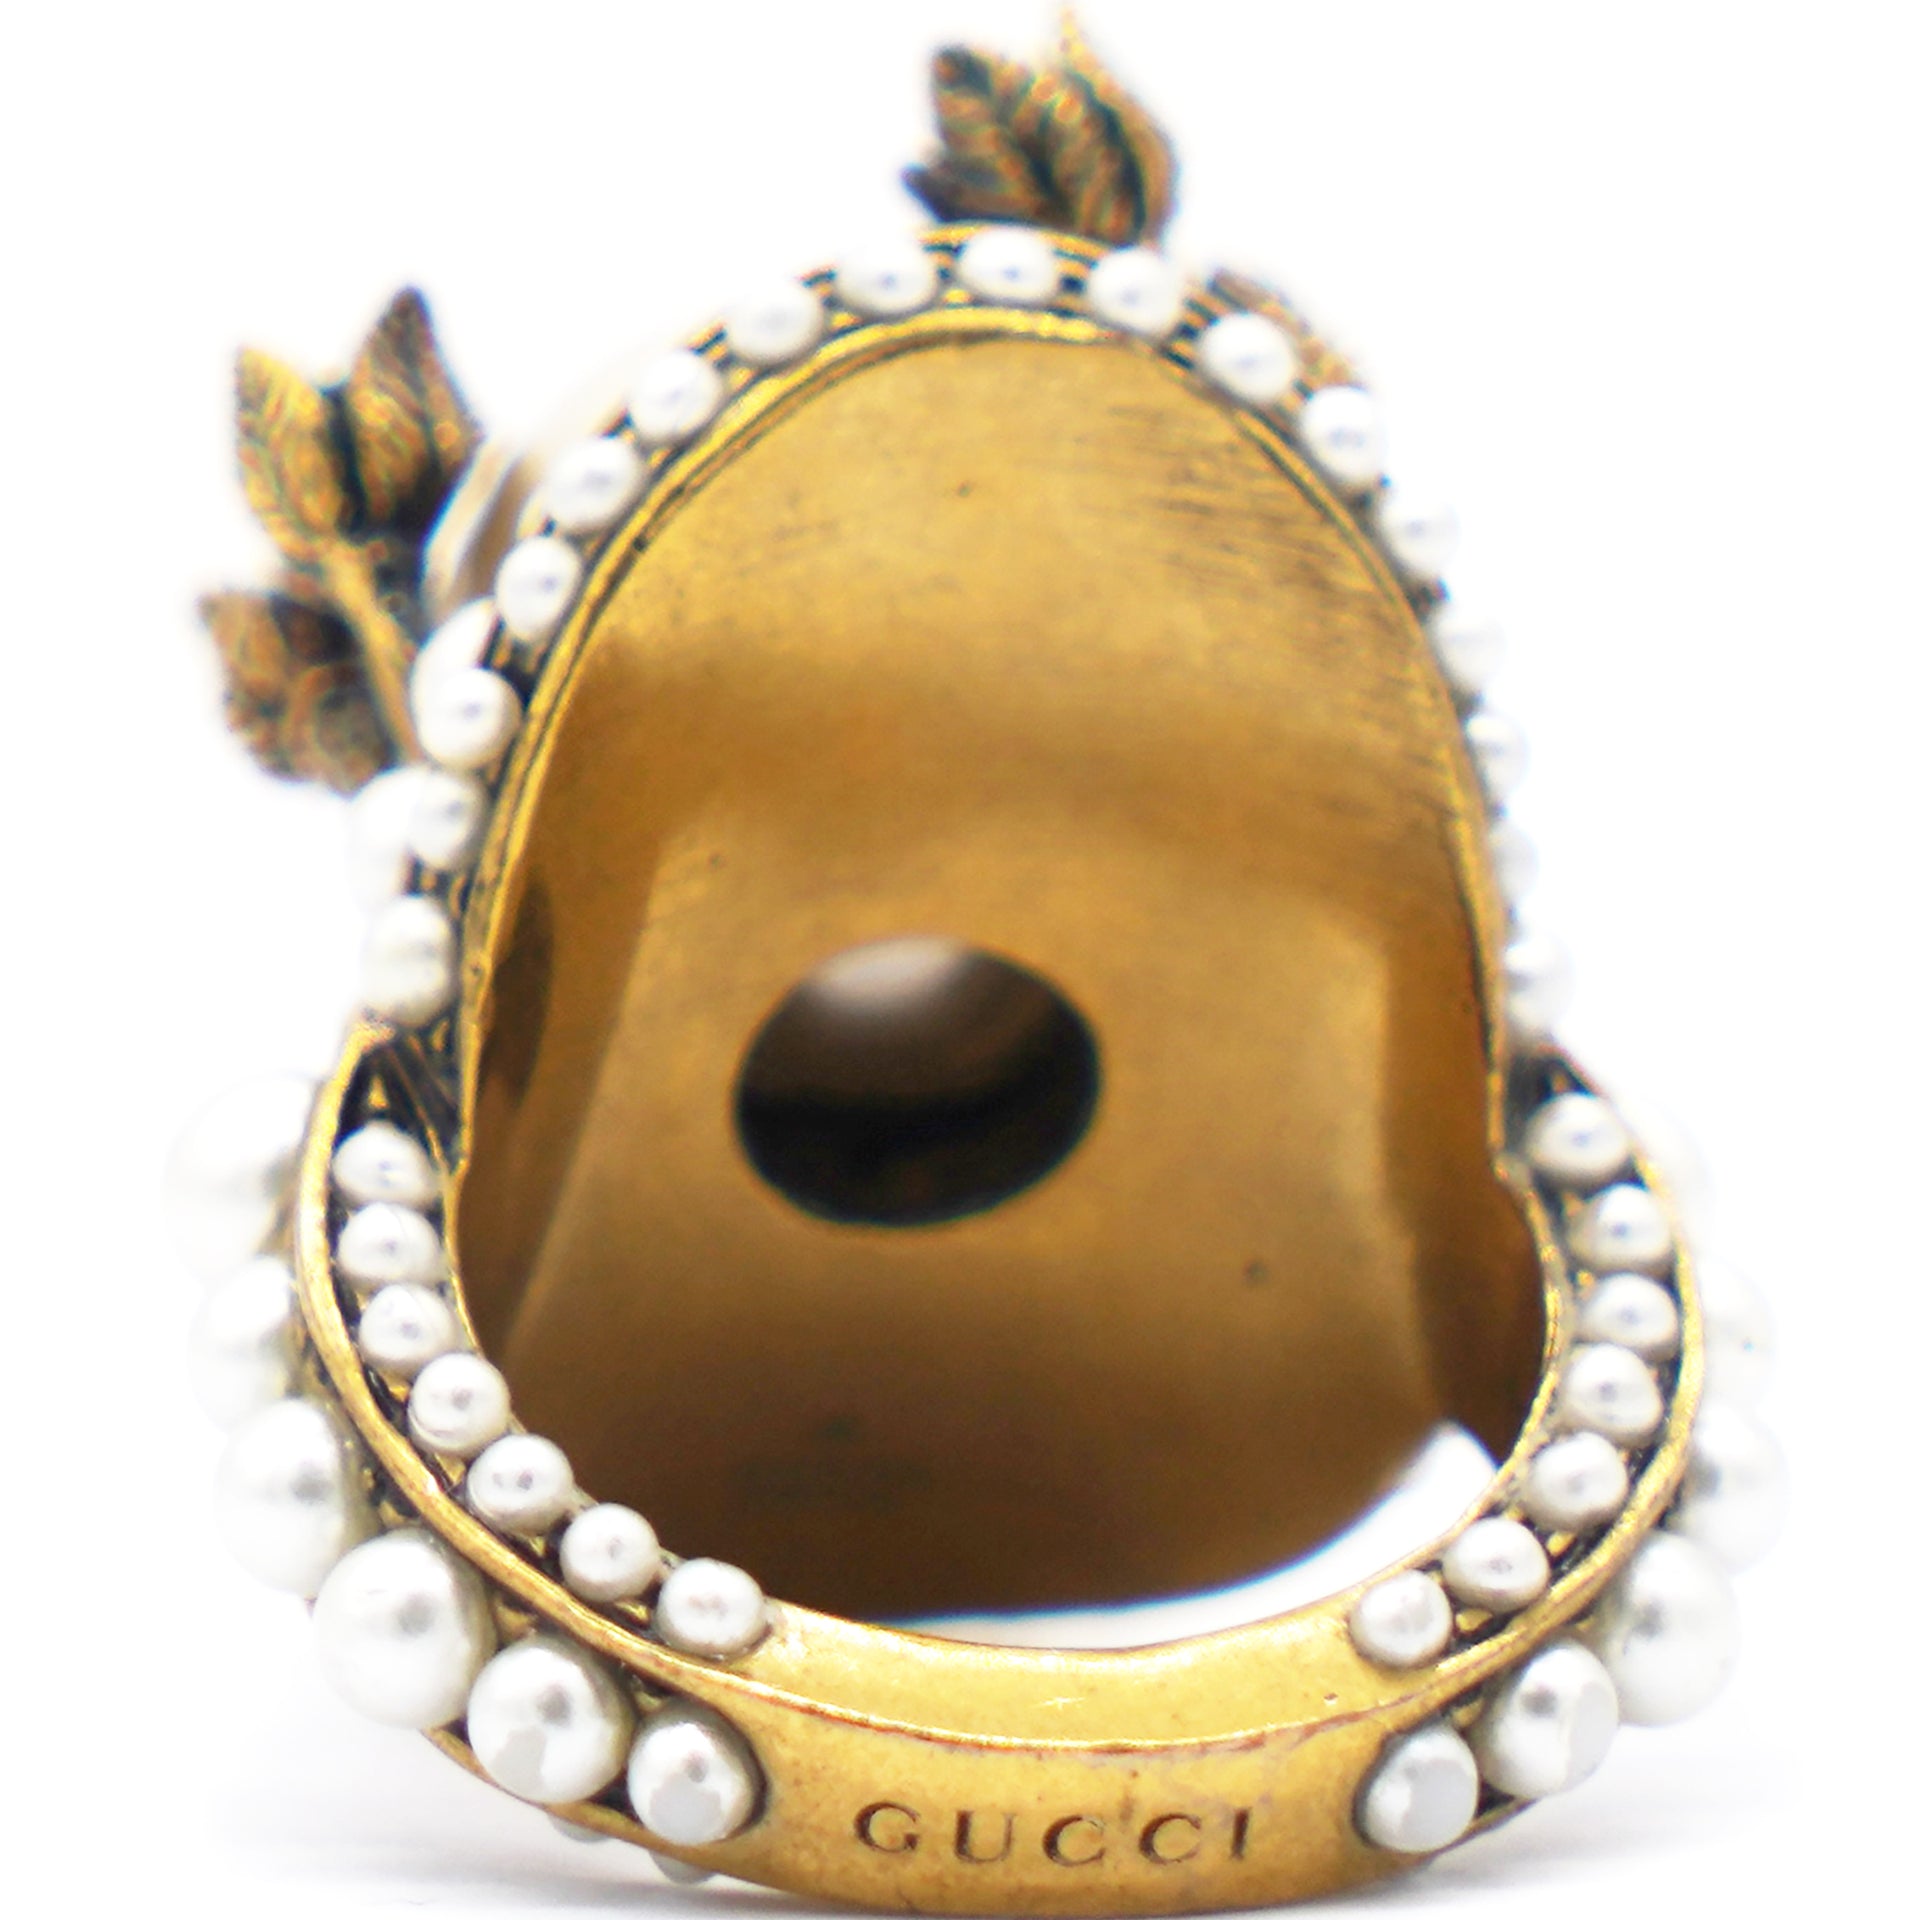 Louis Vuitton Speedy Faux Pearls Gold Tone Metal Ring Size 53